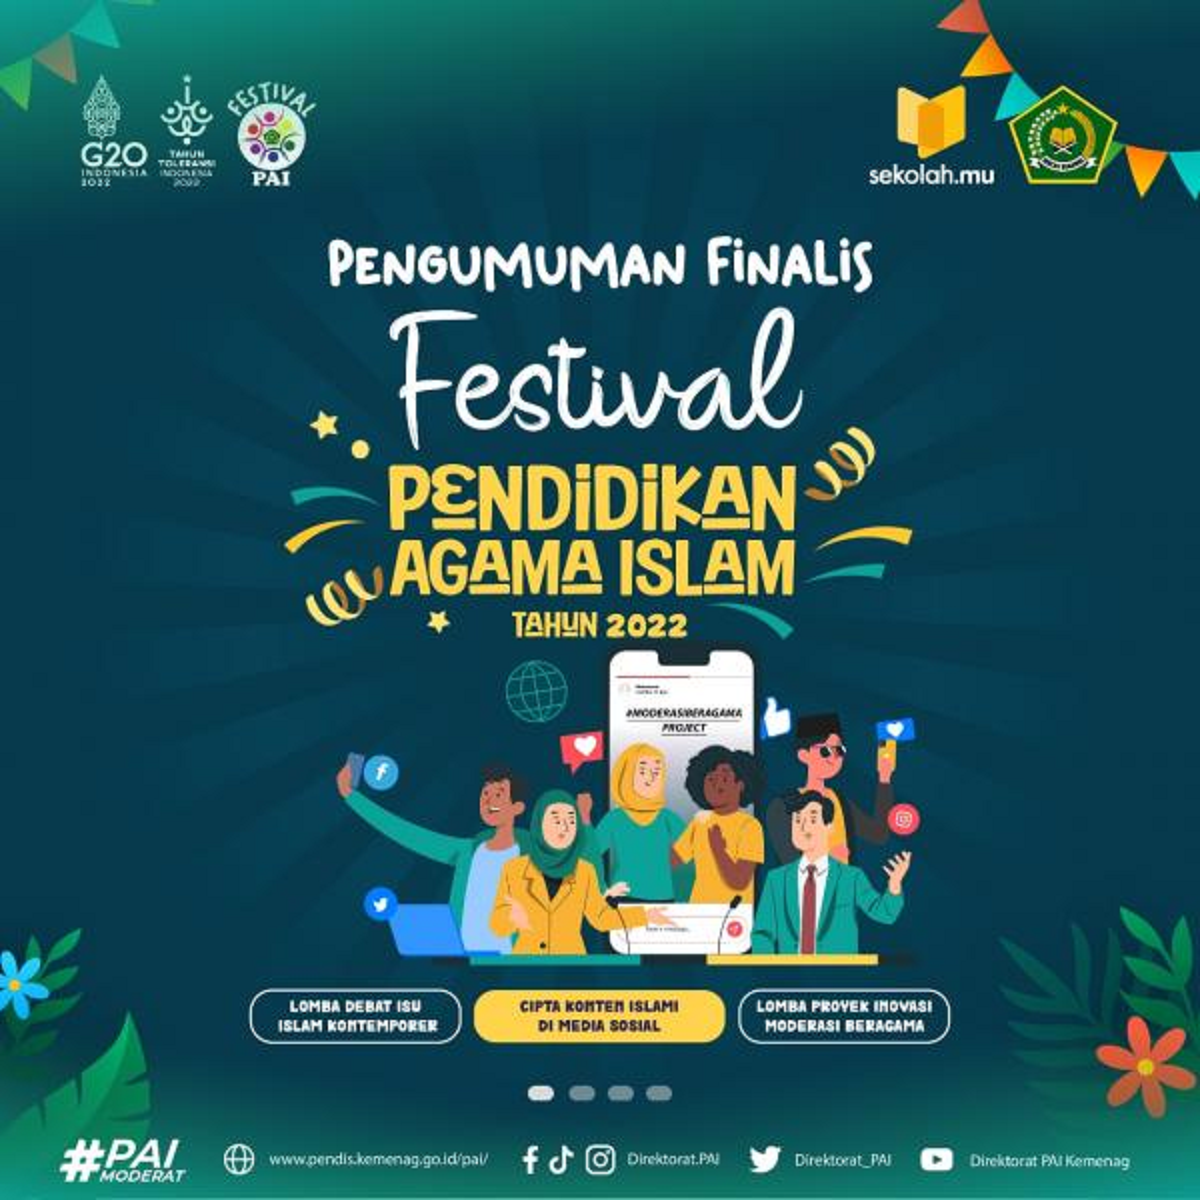 Pengumuman Finalis Festival Pendidikan Agama Islam (PAI) SMA dan SMK Tahun 2022